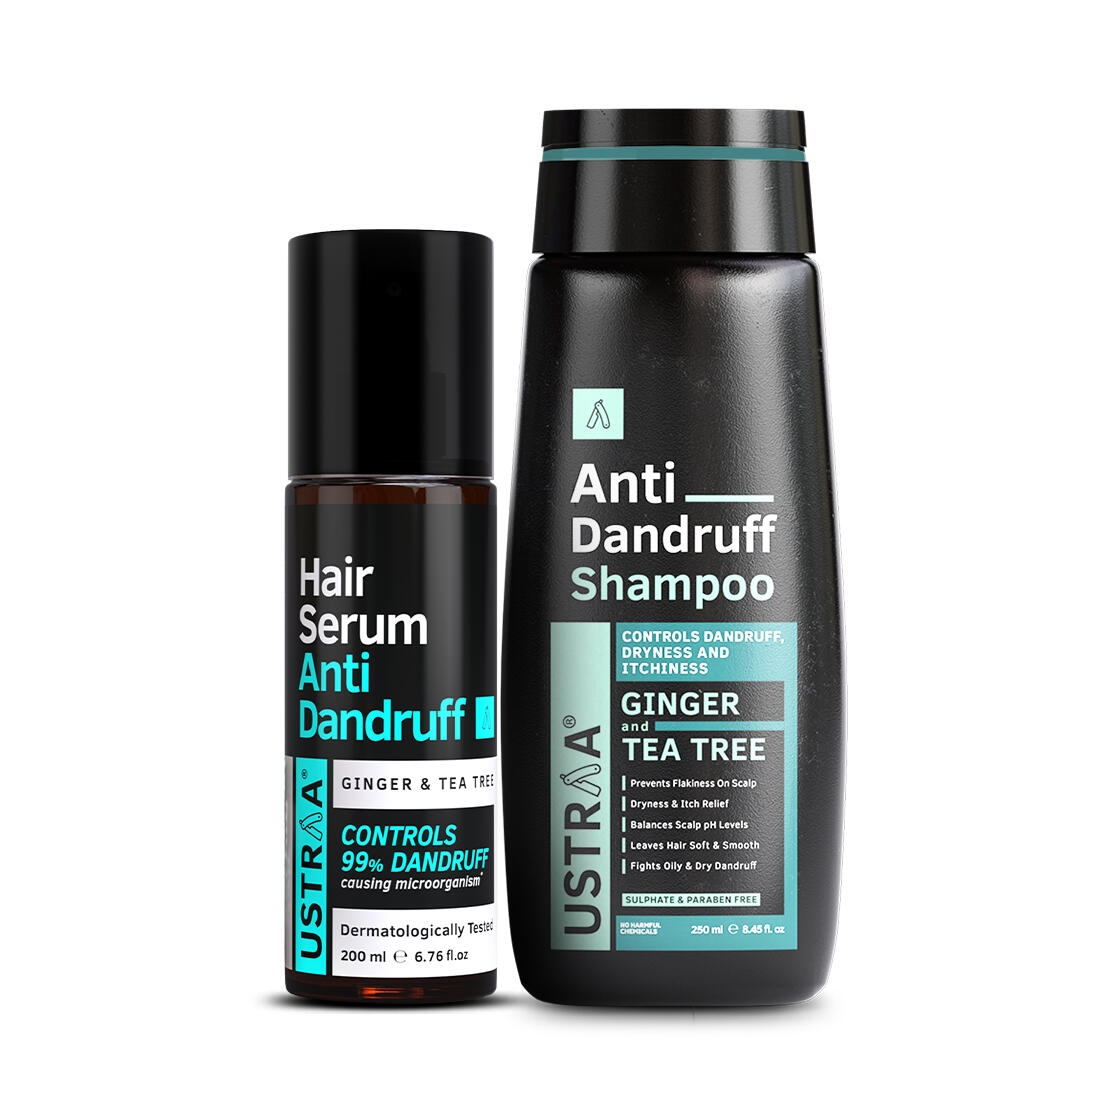 Ustraa | Ustraa Anti Dandruff Kit - Anti Dandruff Serum -200ml & Anti Dandruff Shampoo - 250ml